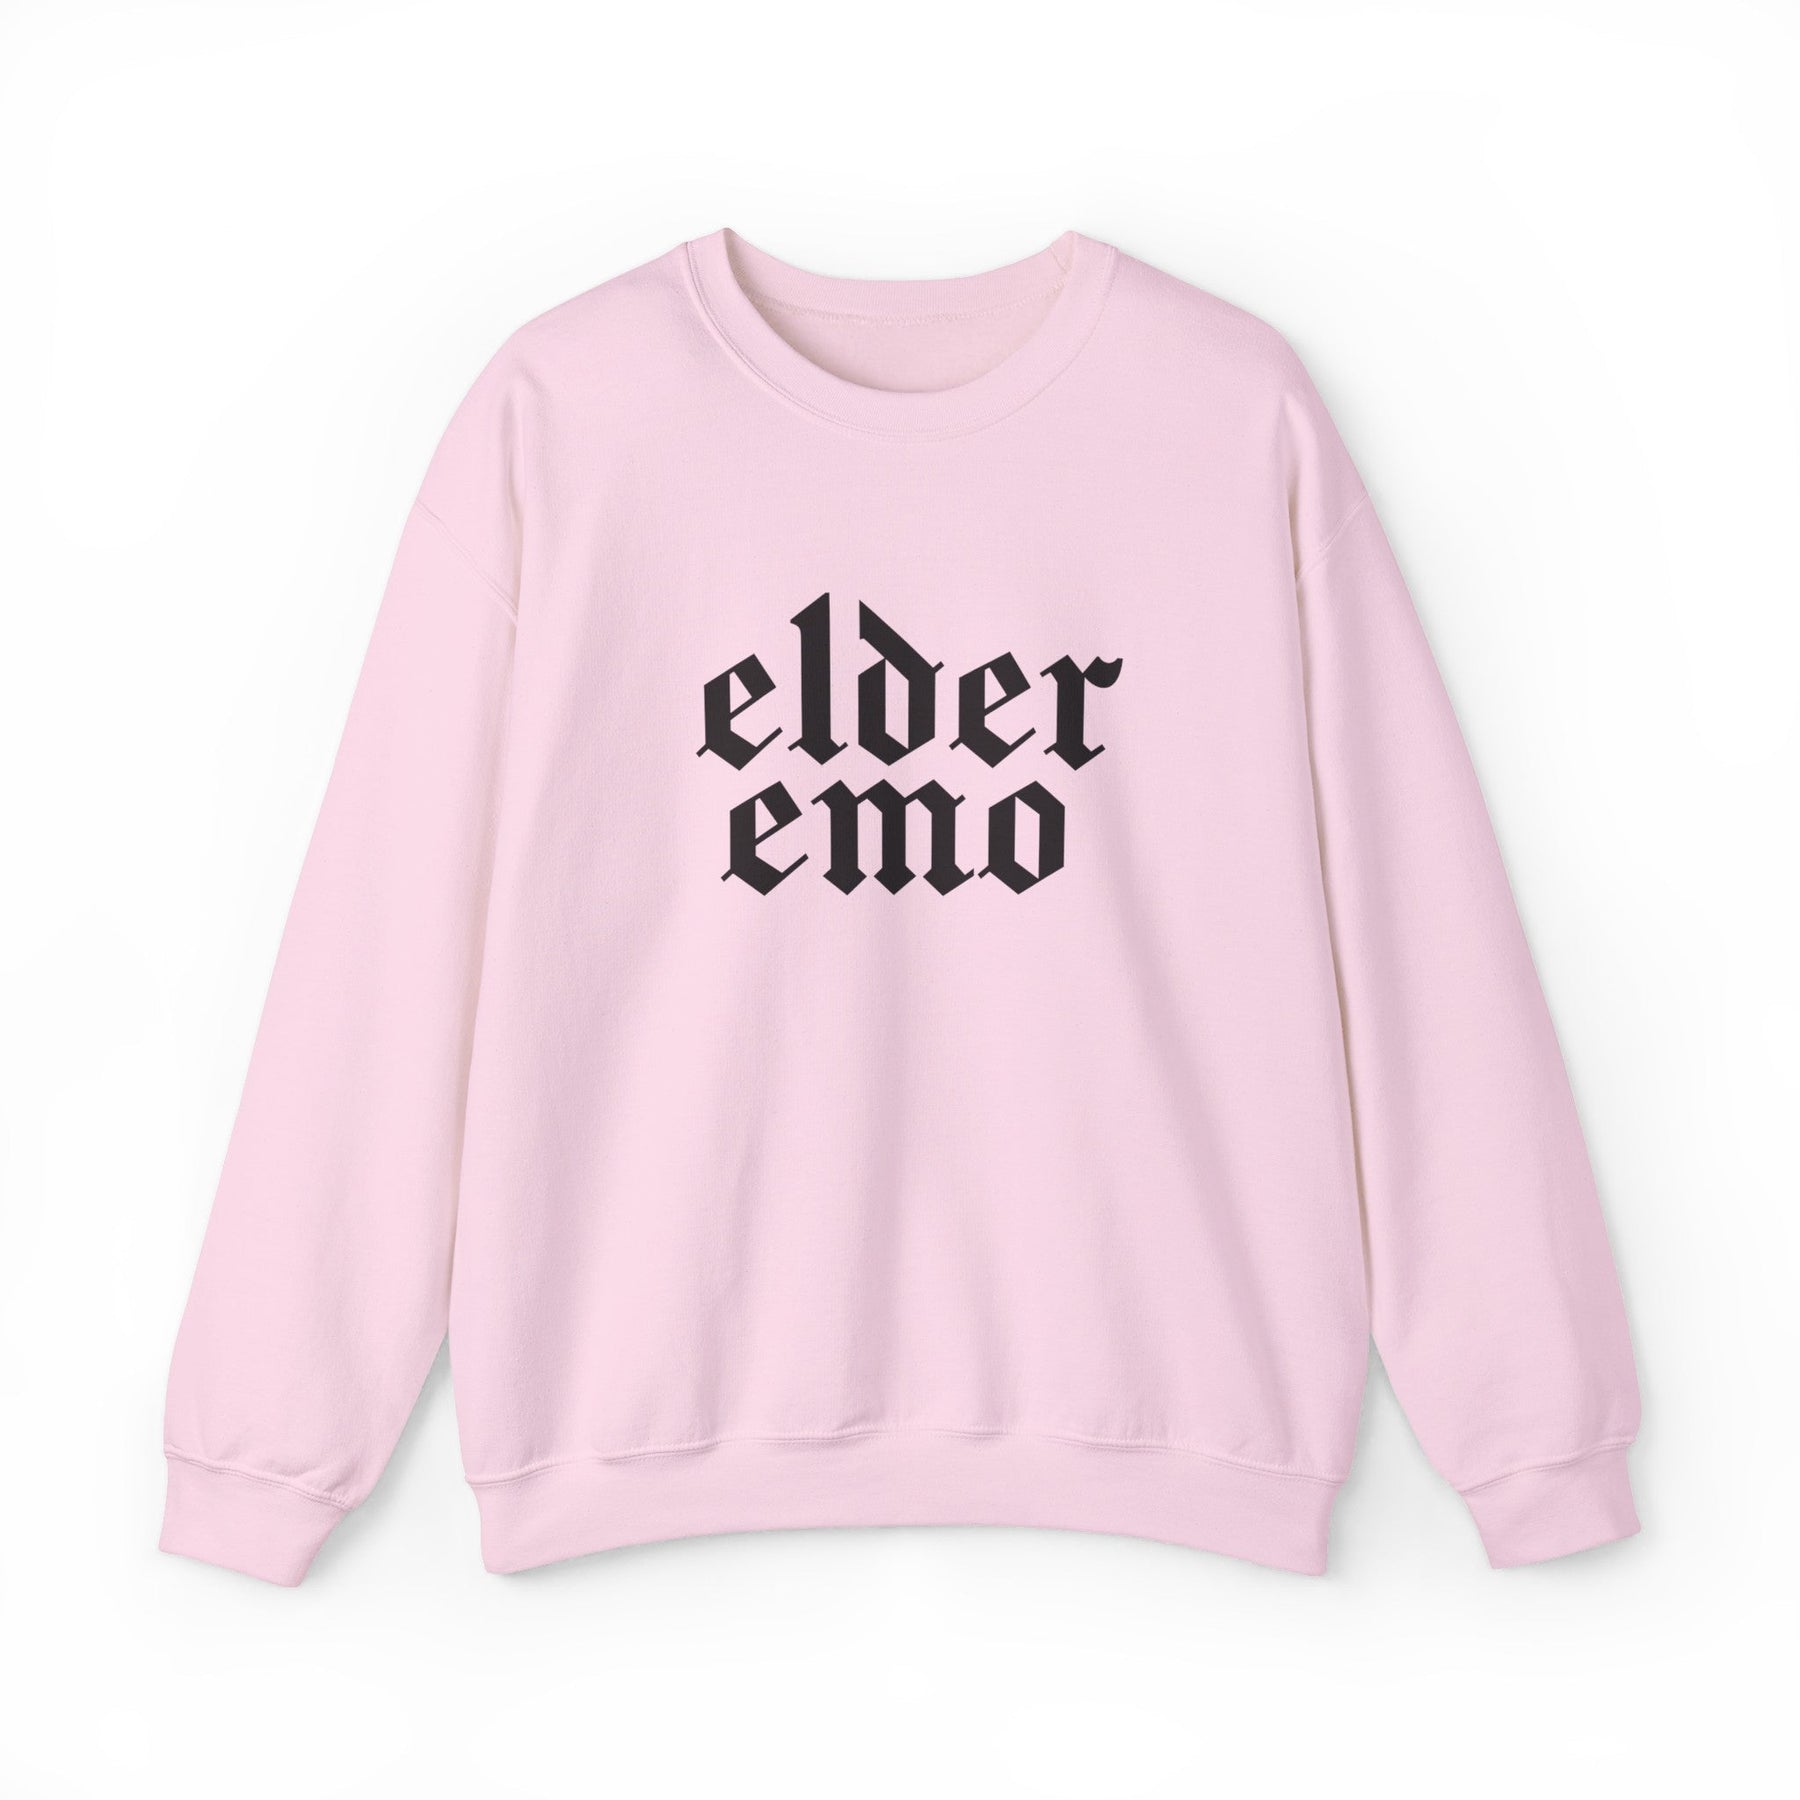 Elder Emo Gothic Font Crewneck Sweatshirt - Goth Cloth Co.Sweatshirt26582569285943238674